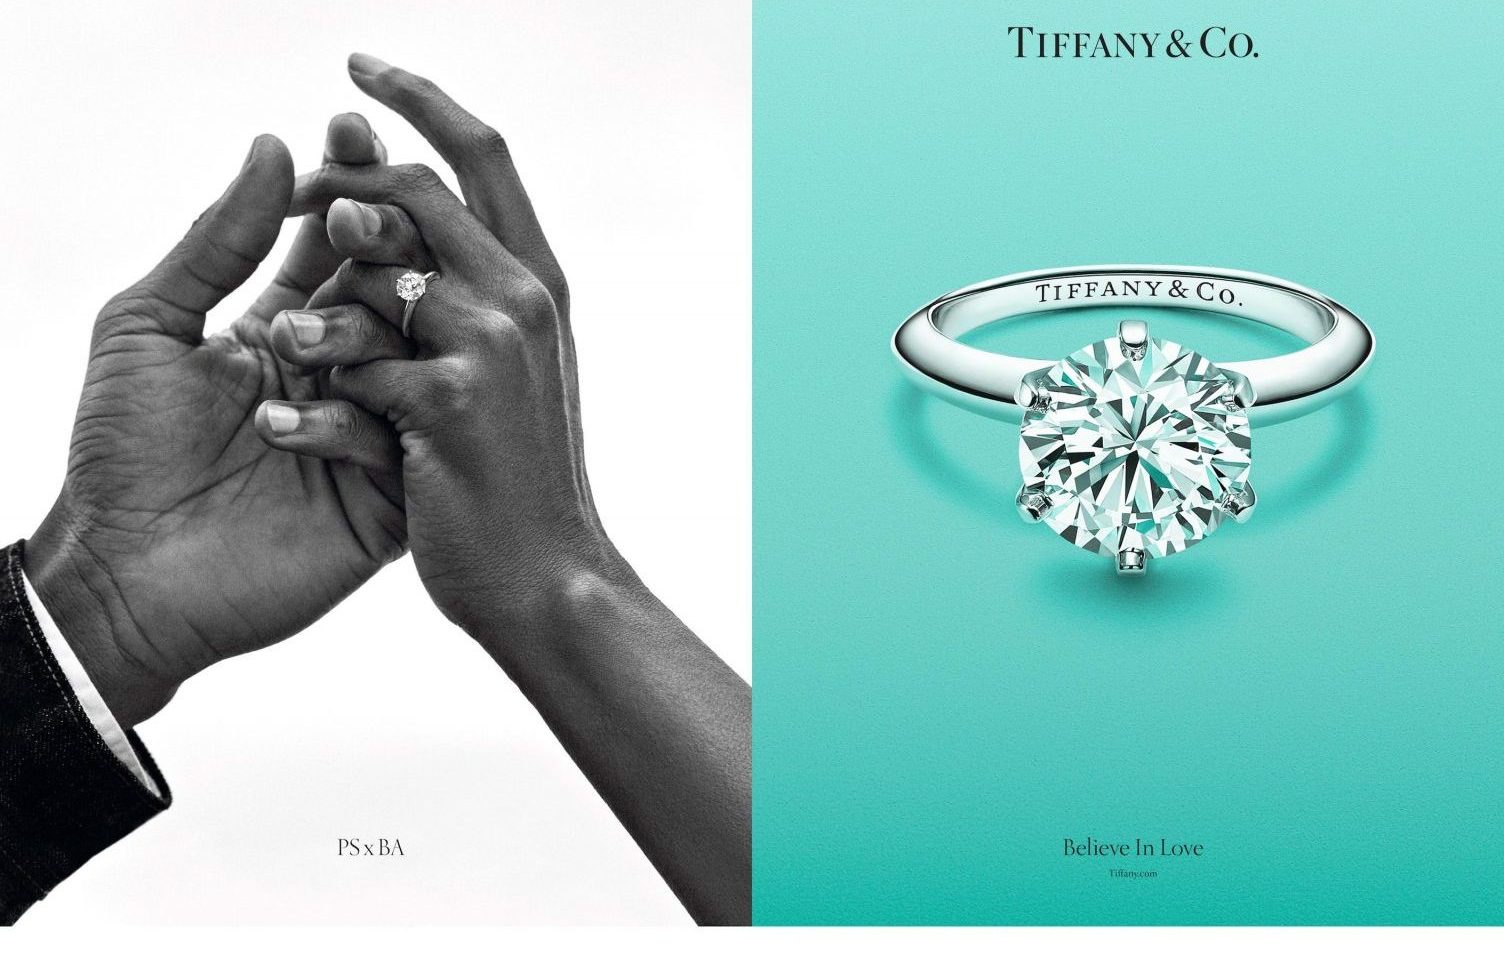 Tiffany & Co. - Watches & Jewelry - LVMH